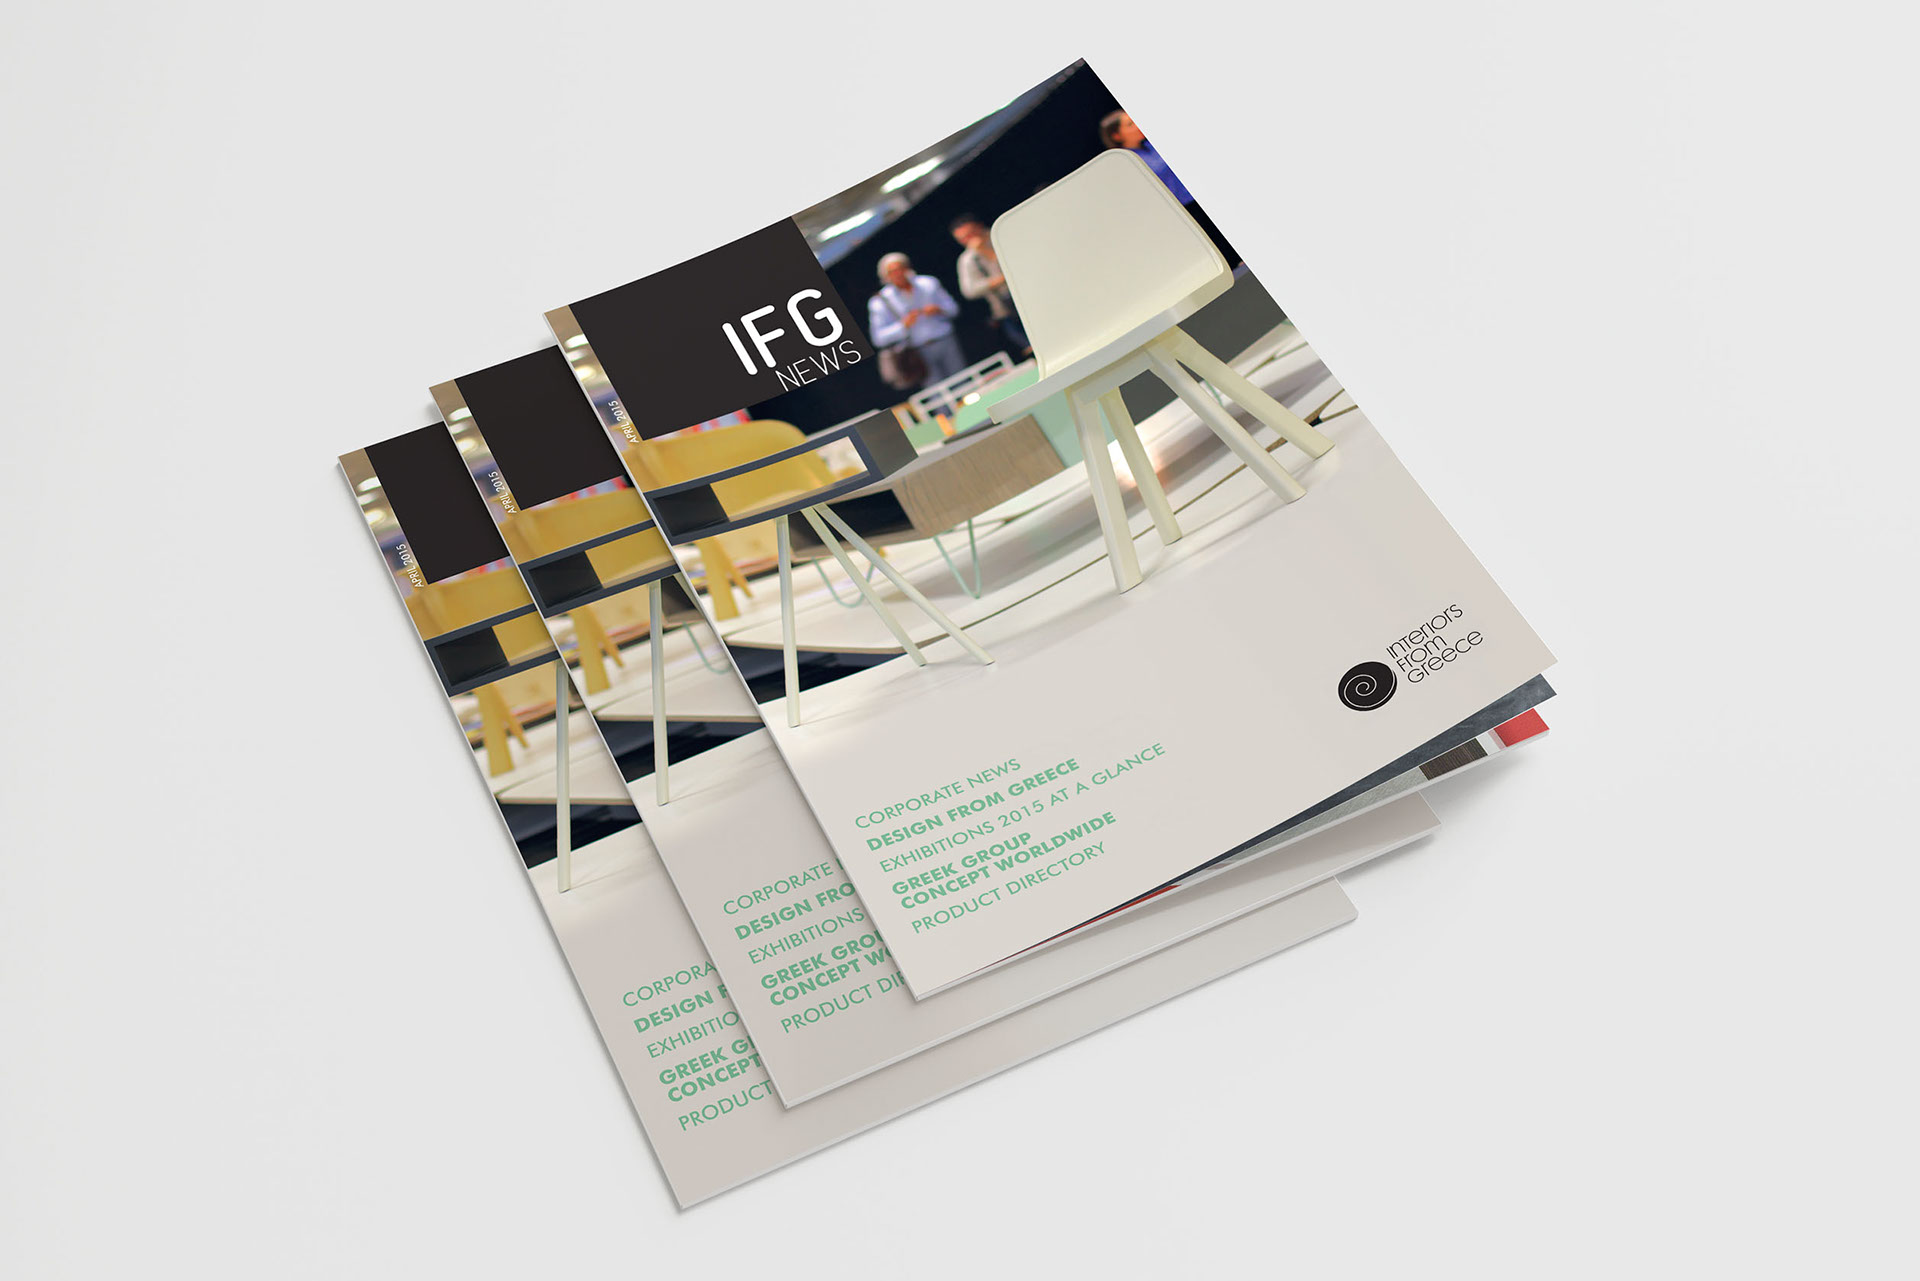 IFG news室内设计刊物版面设计